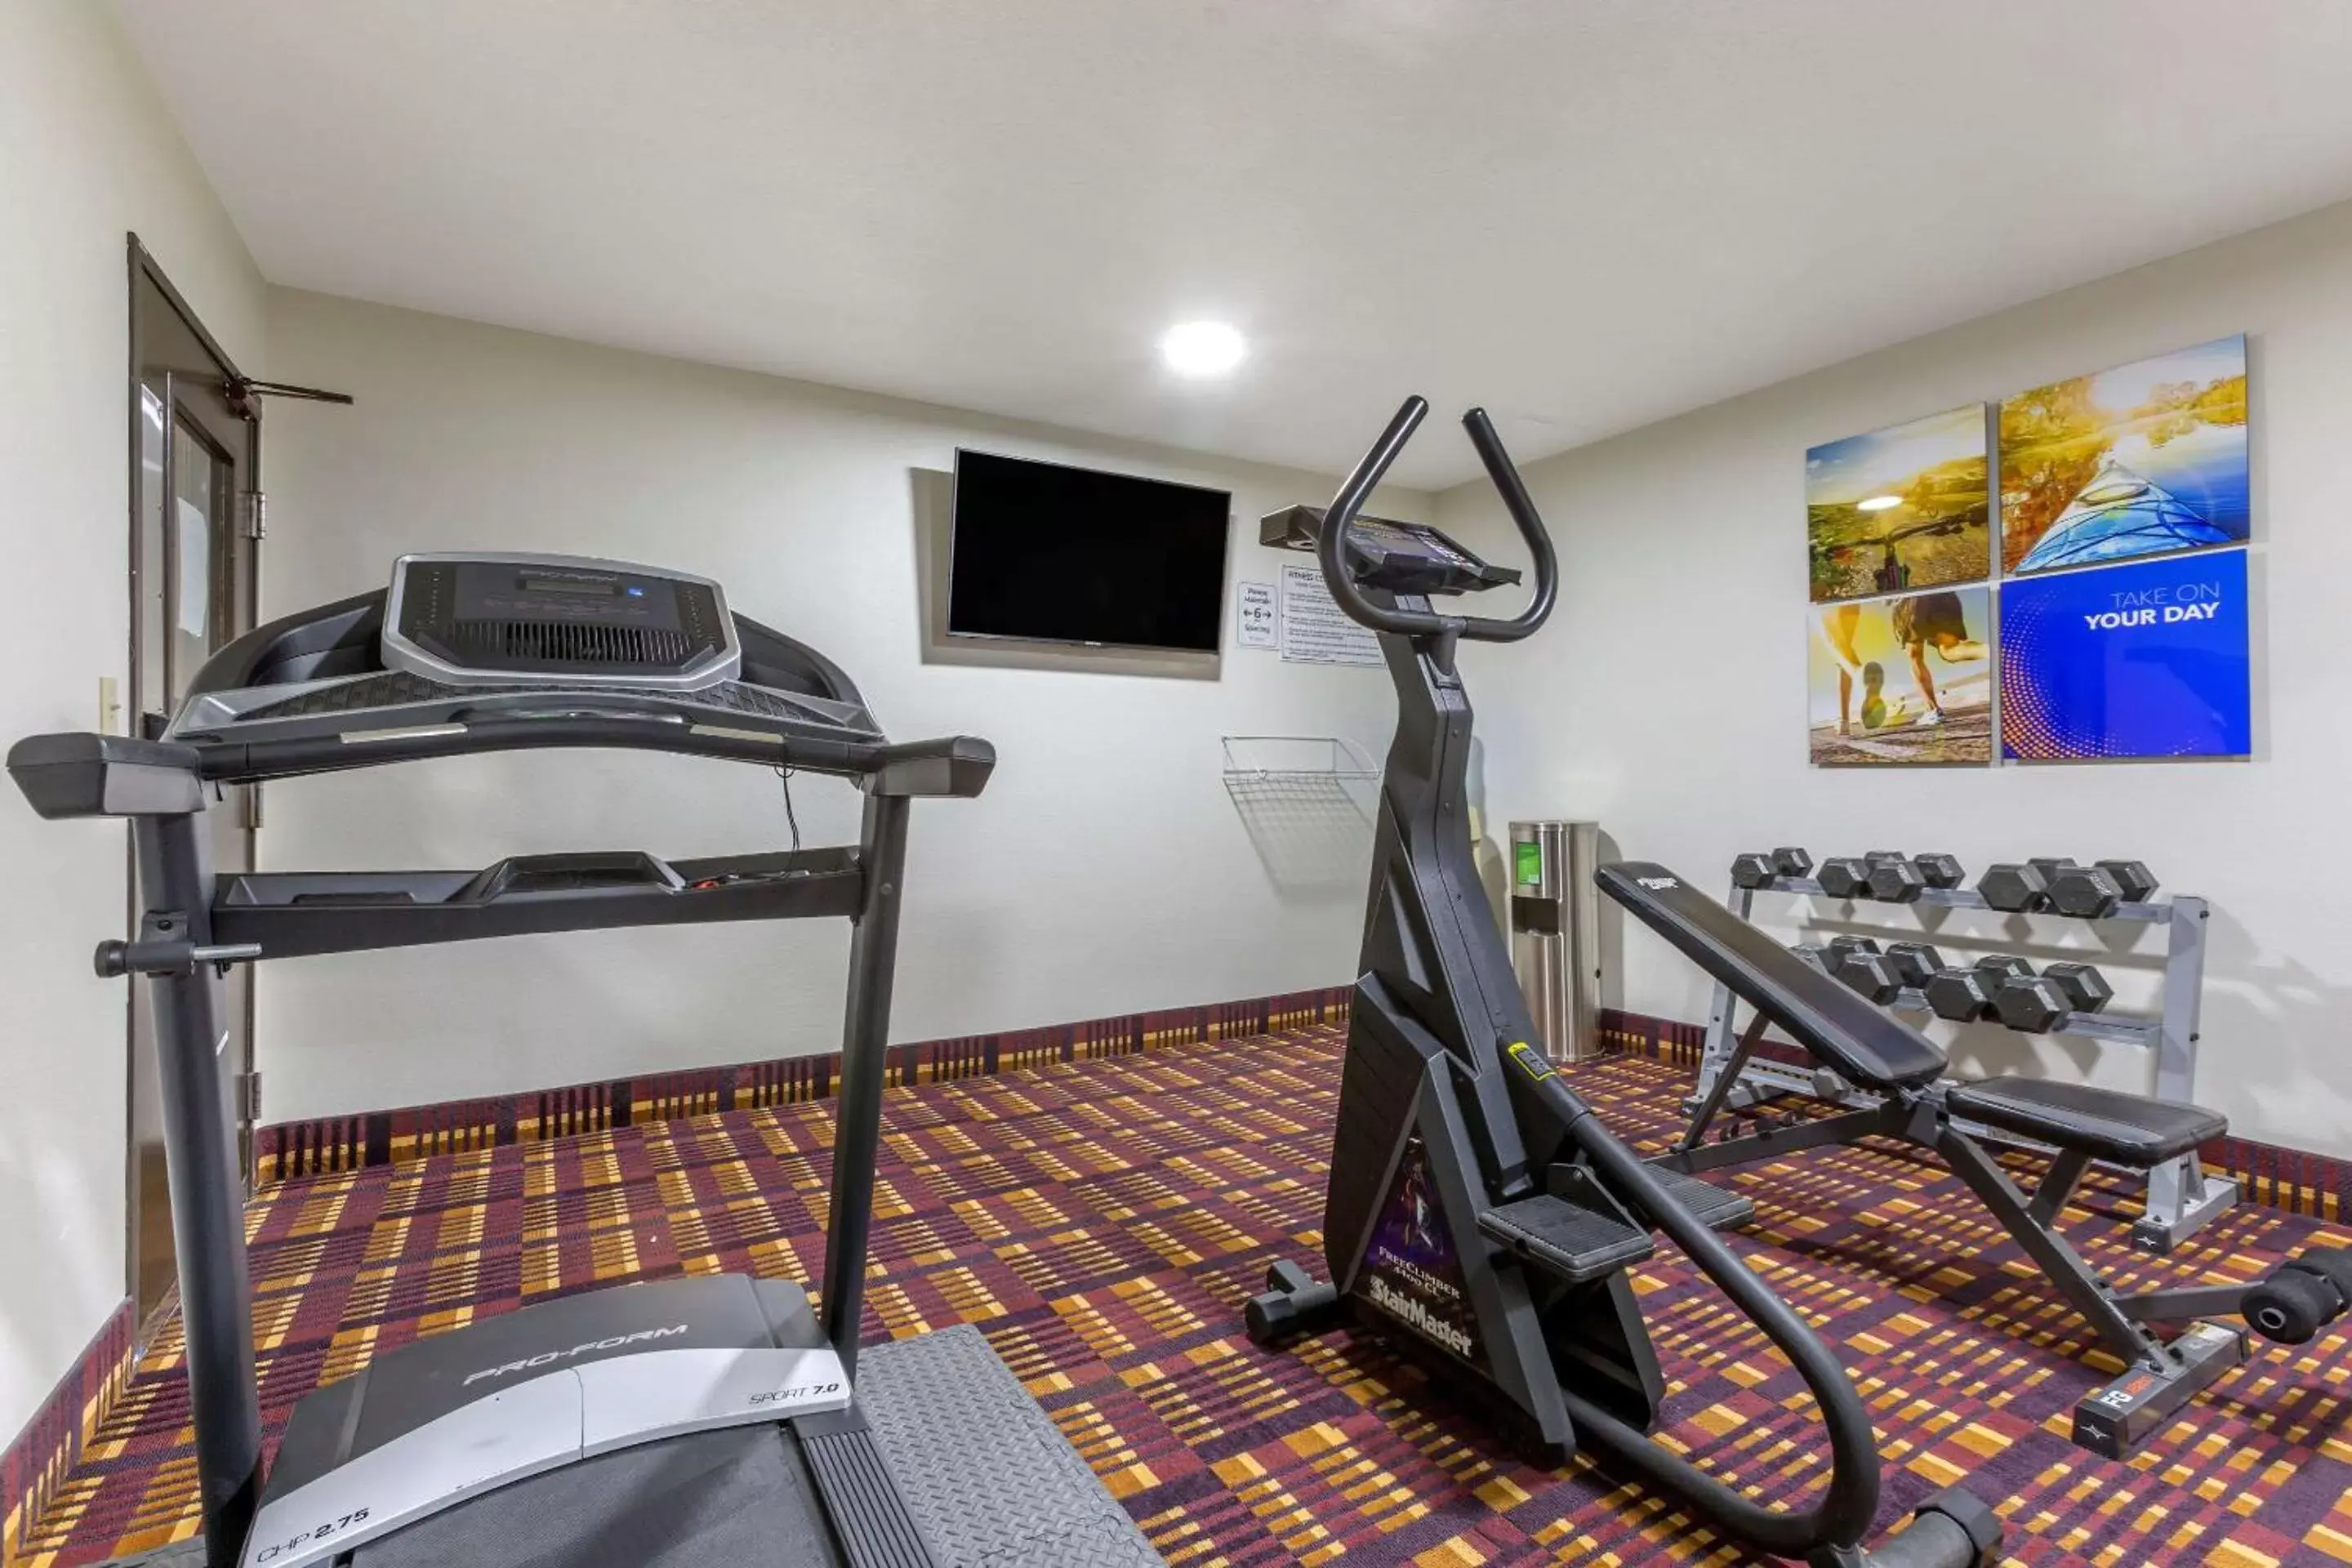 Fitness centre/facilities, Fitness Center/Facilities in Comfort Inn & Suites Surprise Near Sun City West